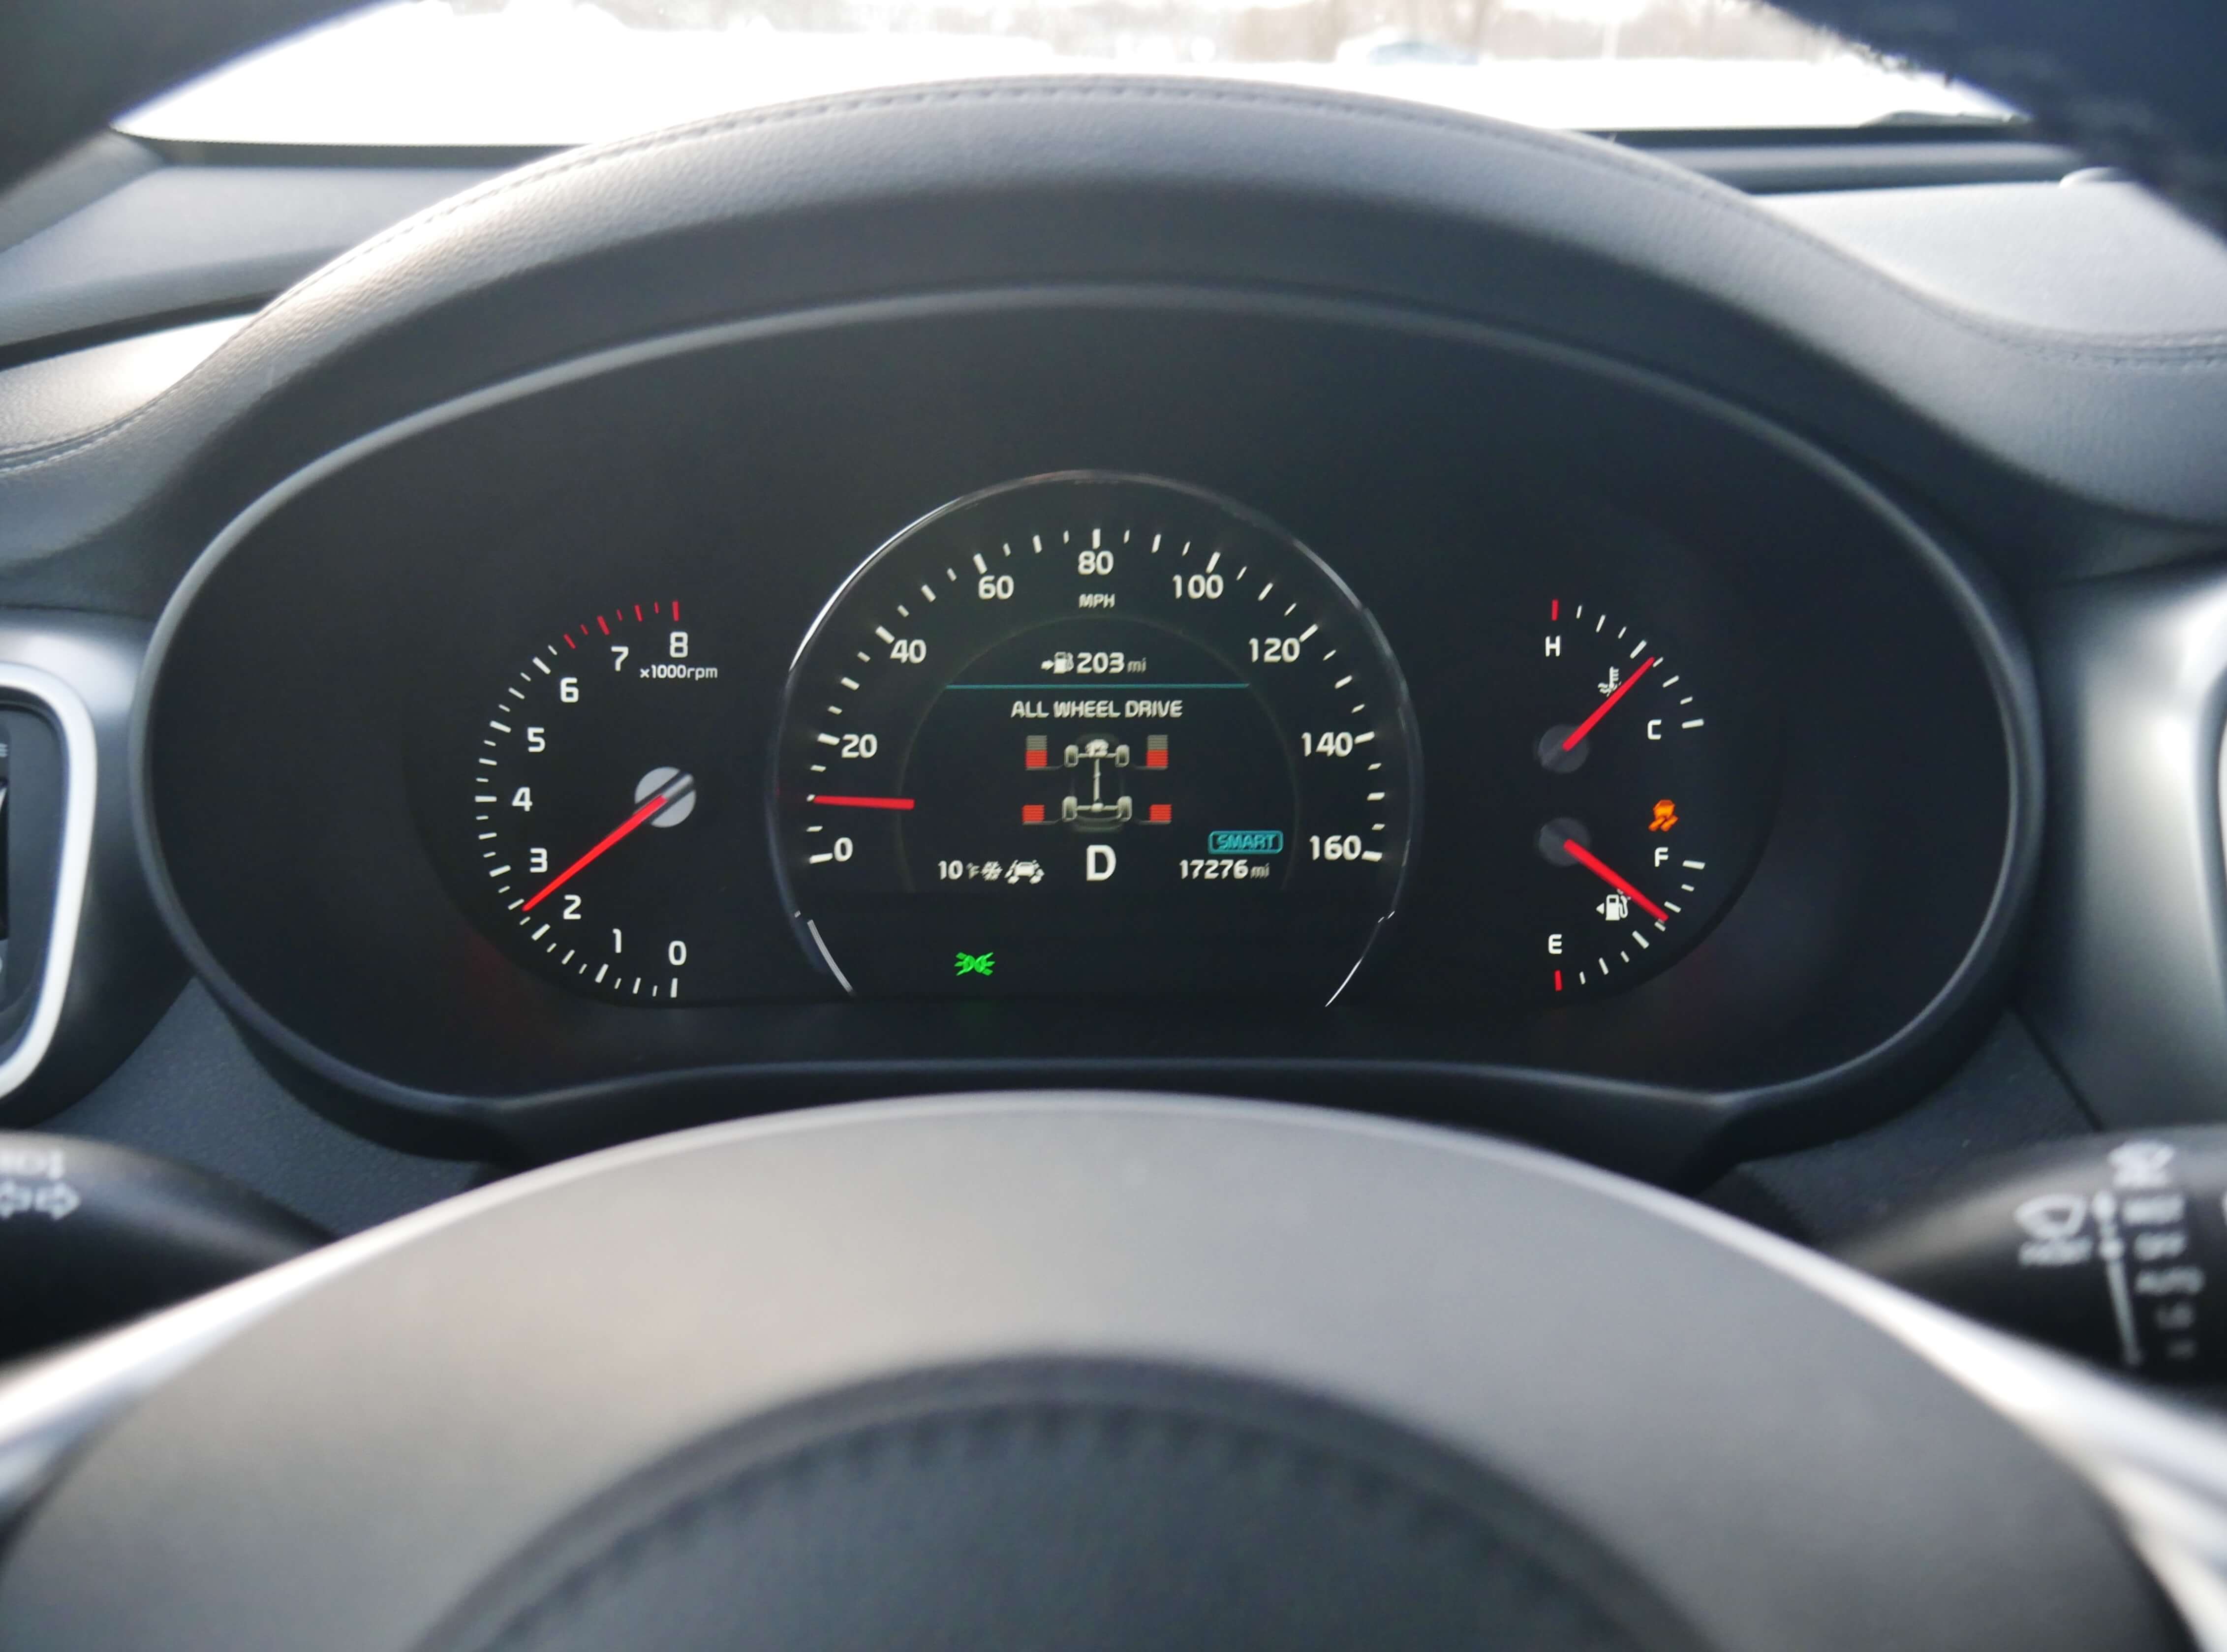 2019 Kia Sorento SXL AWD: Decipherable analog gauge cluster w/ 7.0" center trip data display including all-wheel drive status